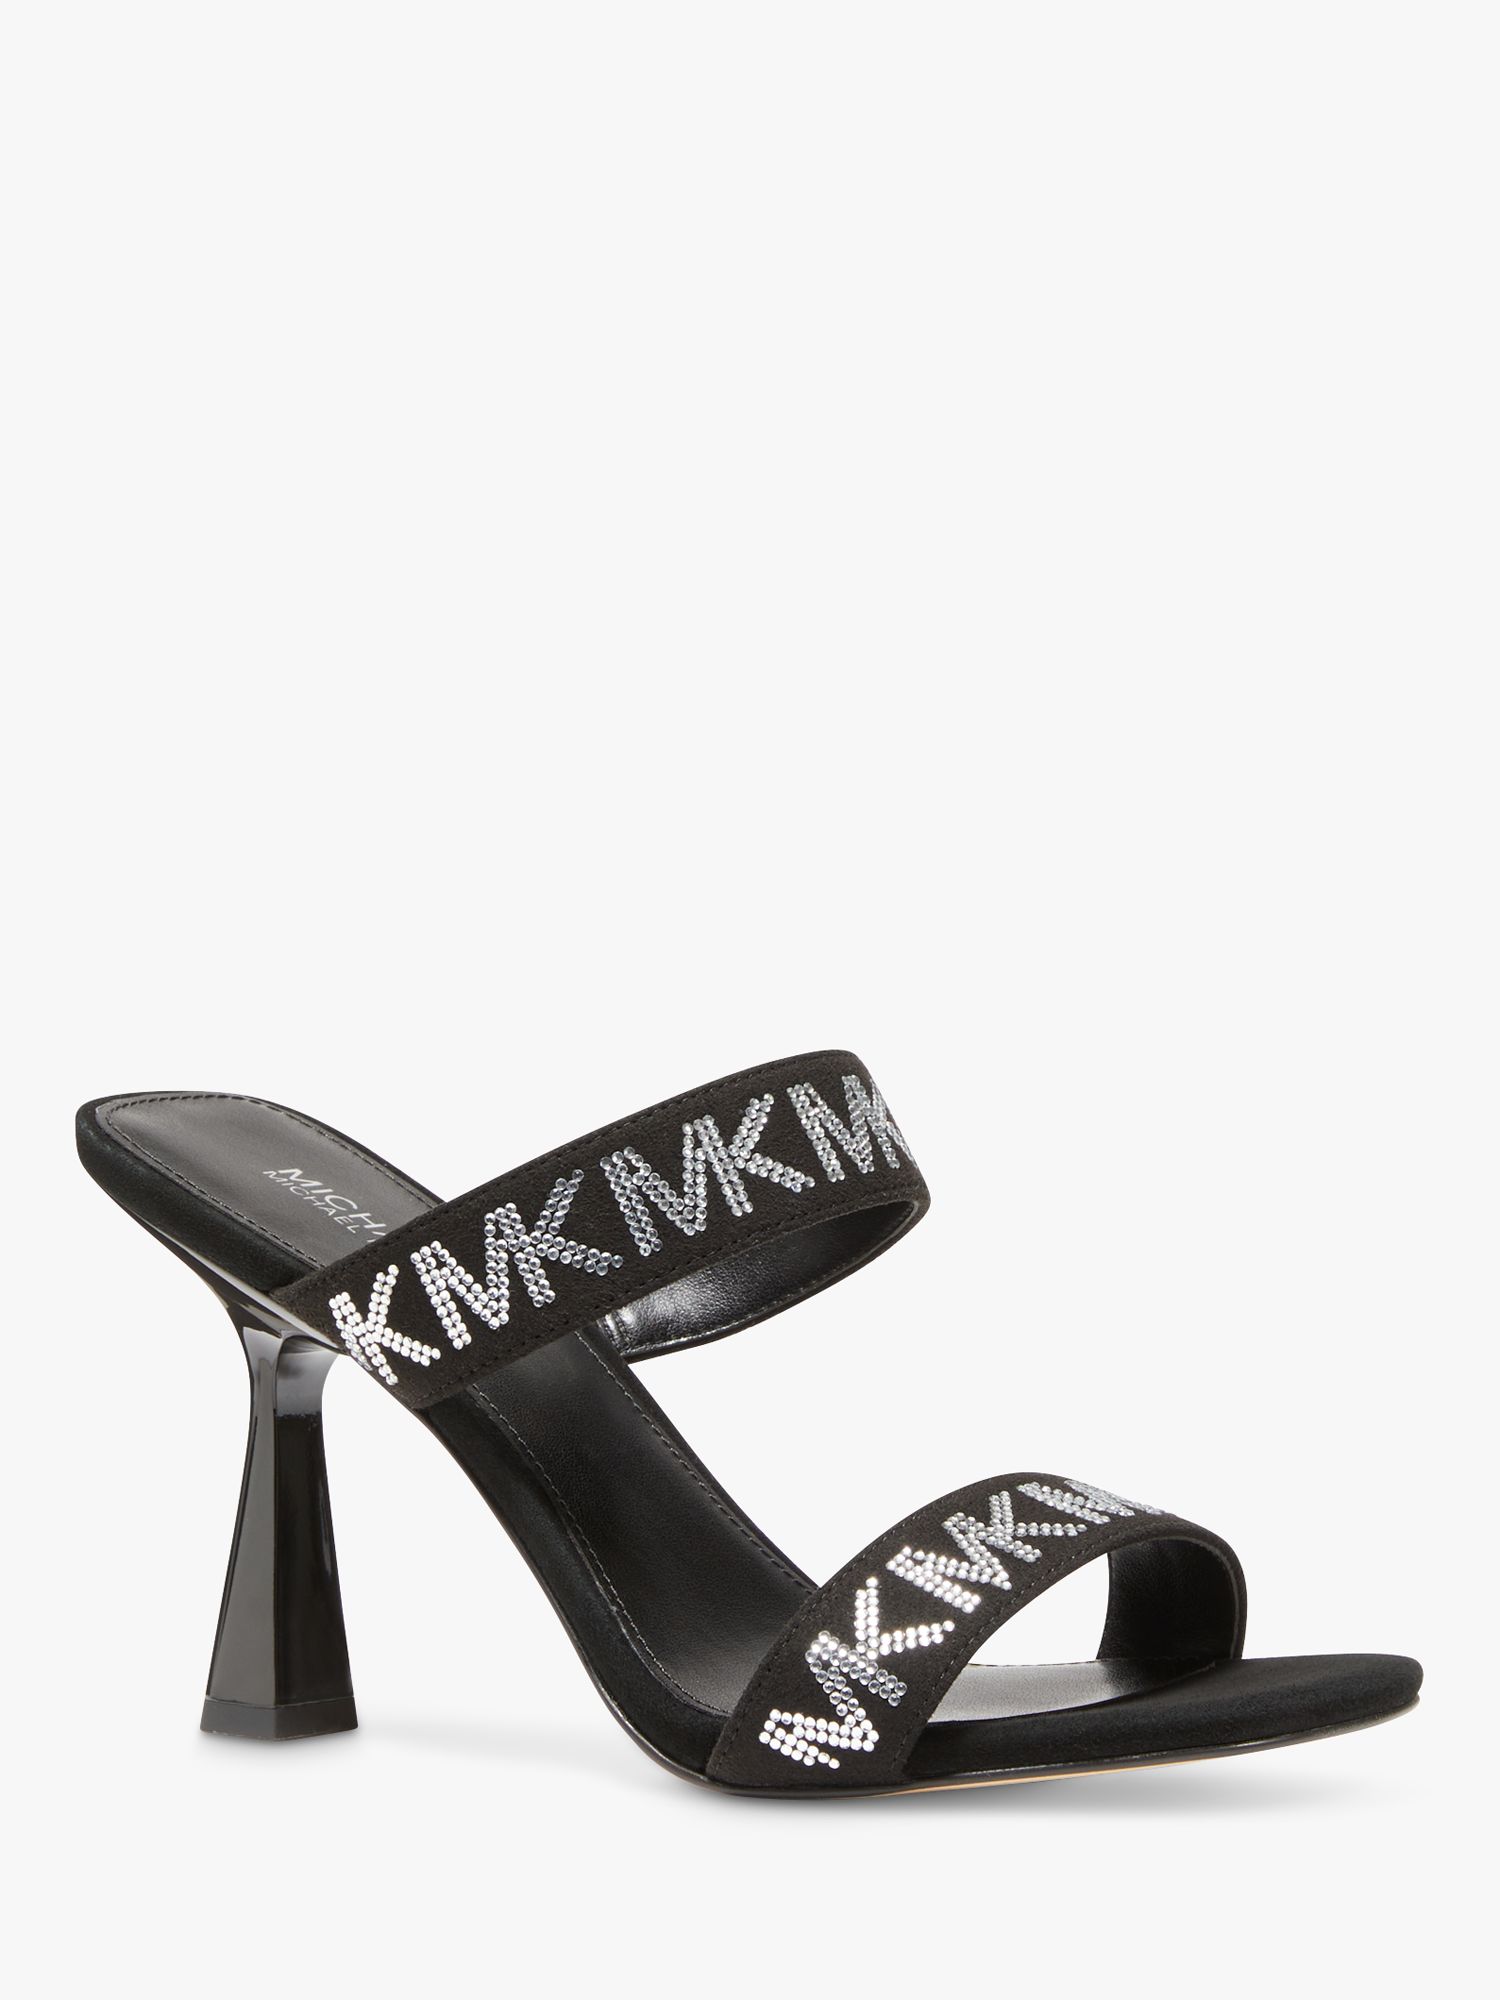 Michael Kors Clara Studded High Heel Mule Sandals, Black